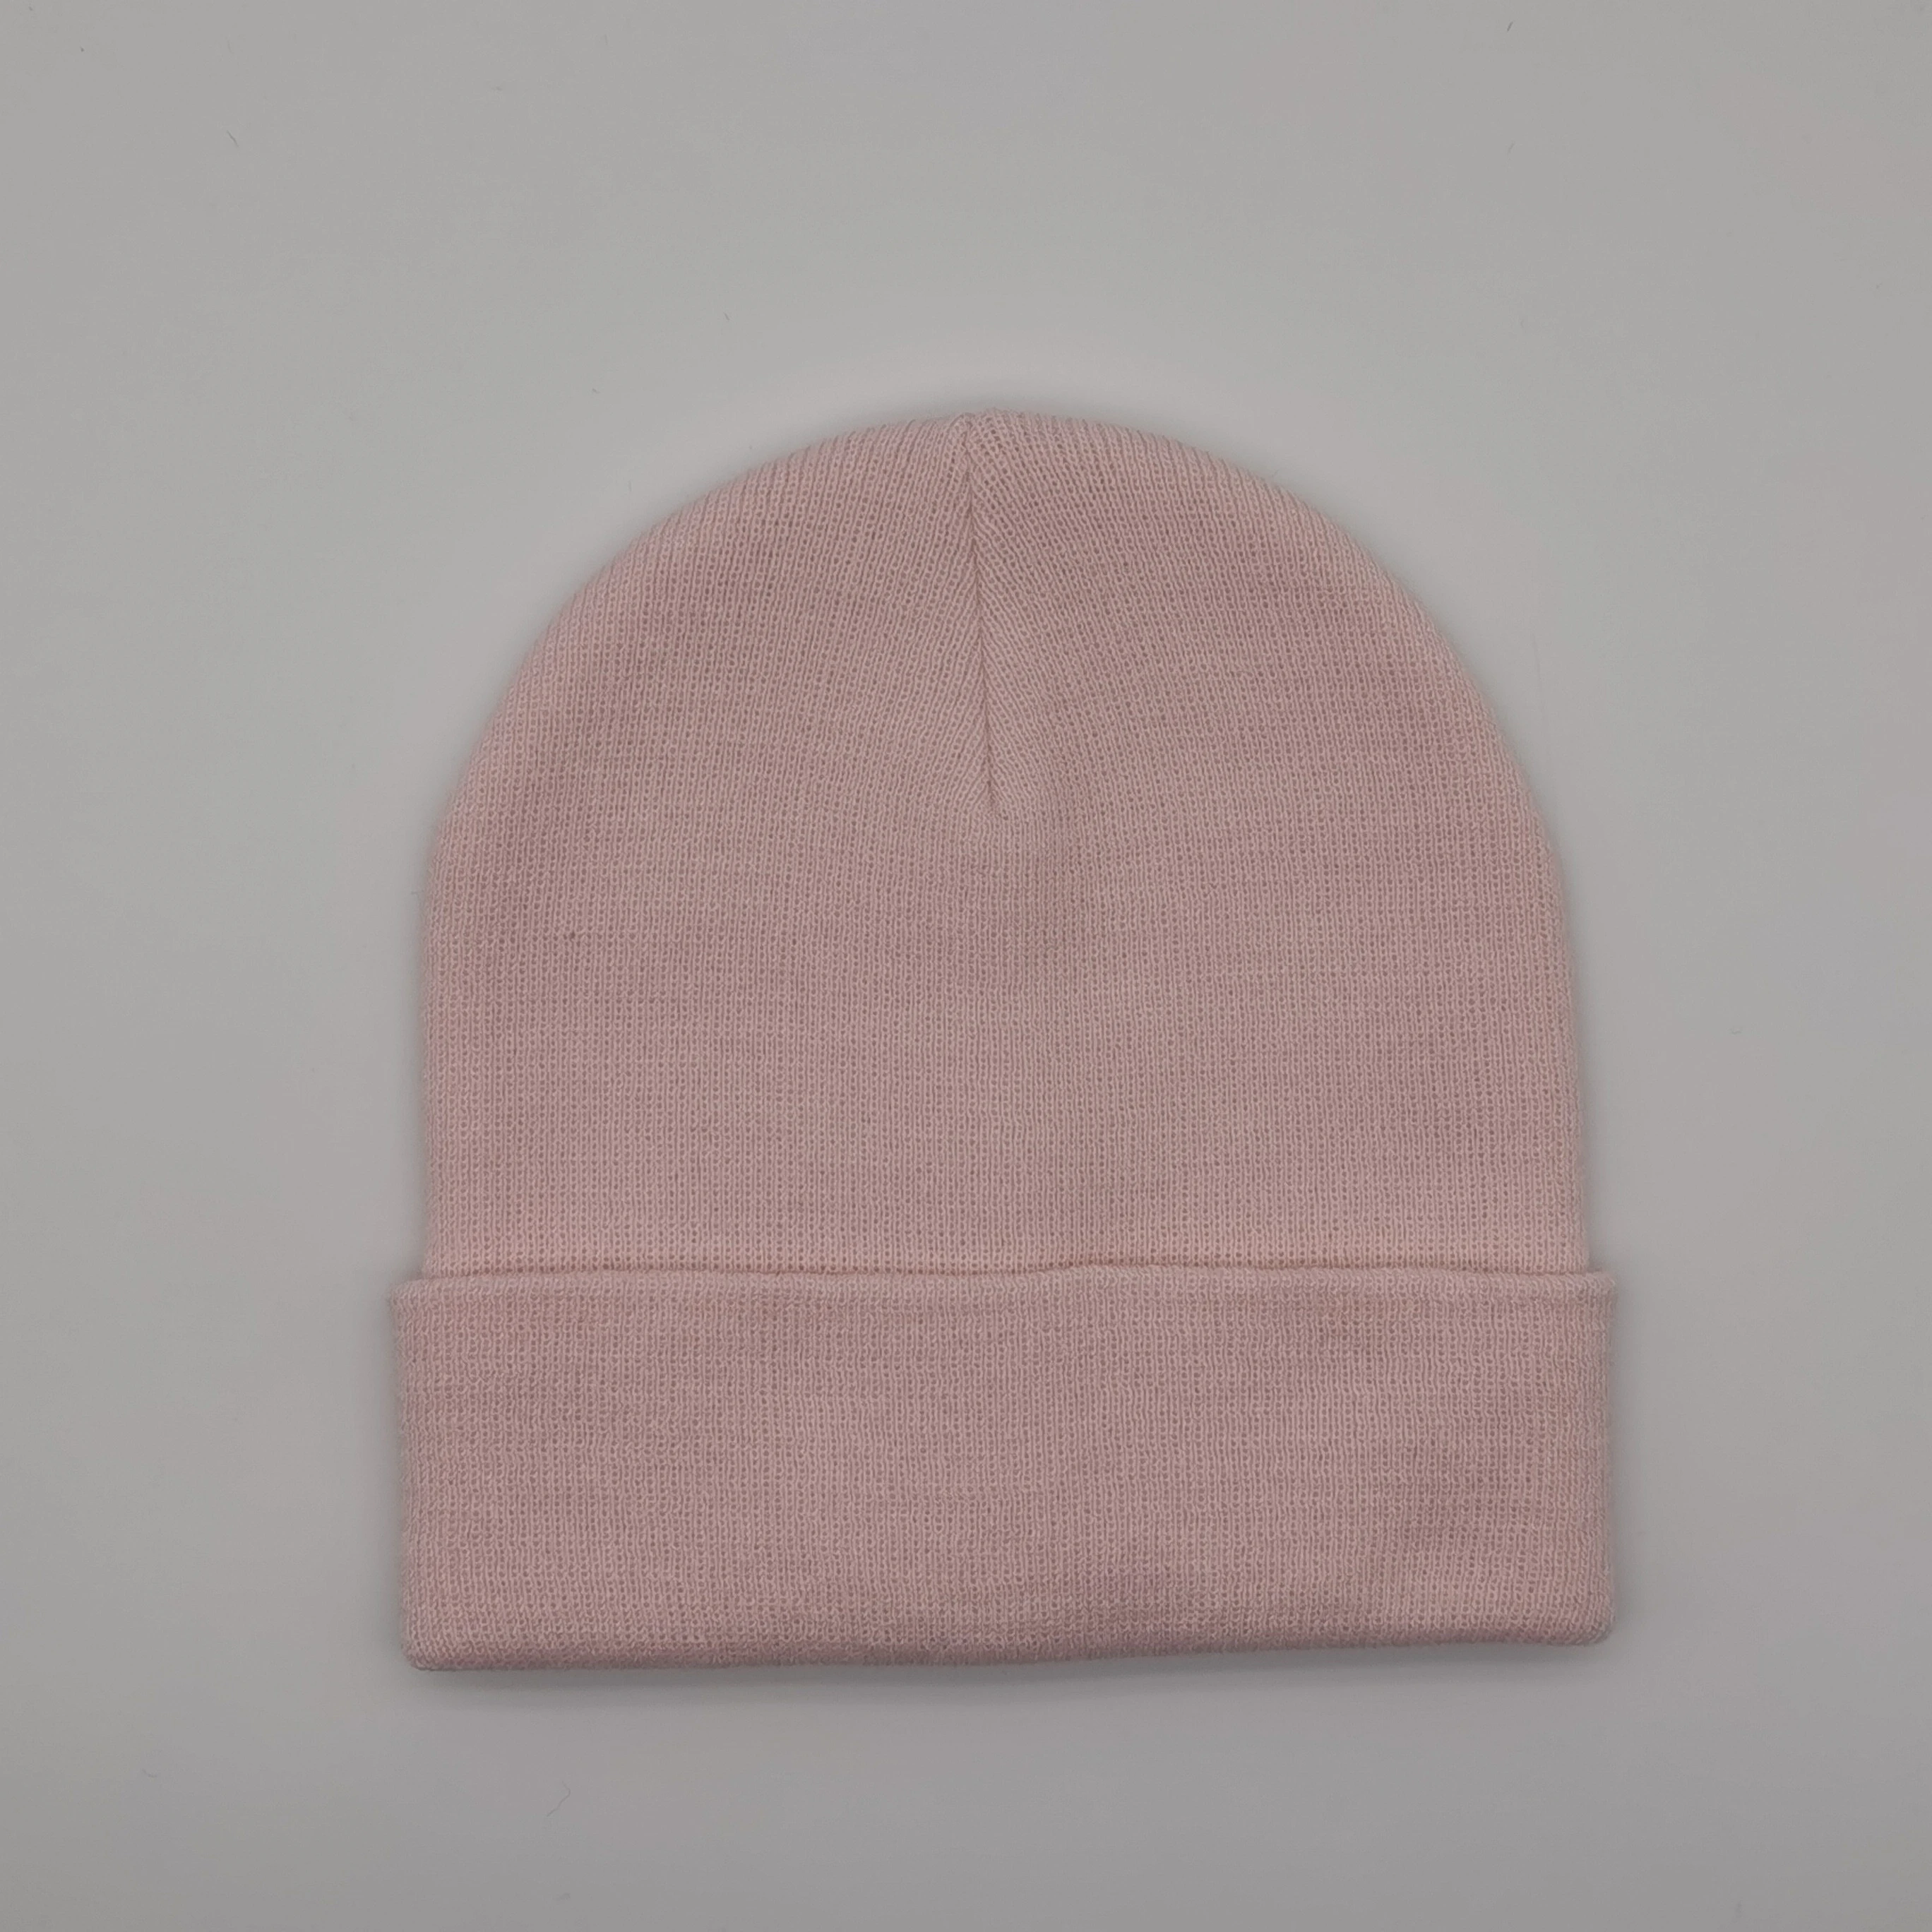 2021 high quality unisex basic model knitted beanie  hat